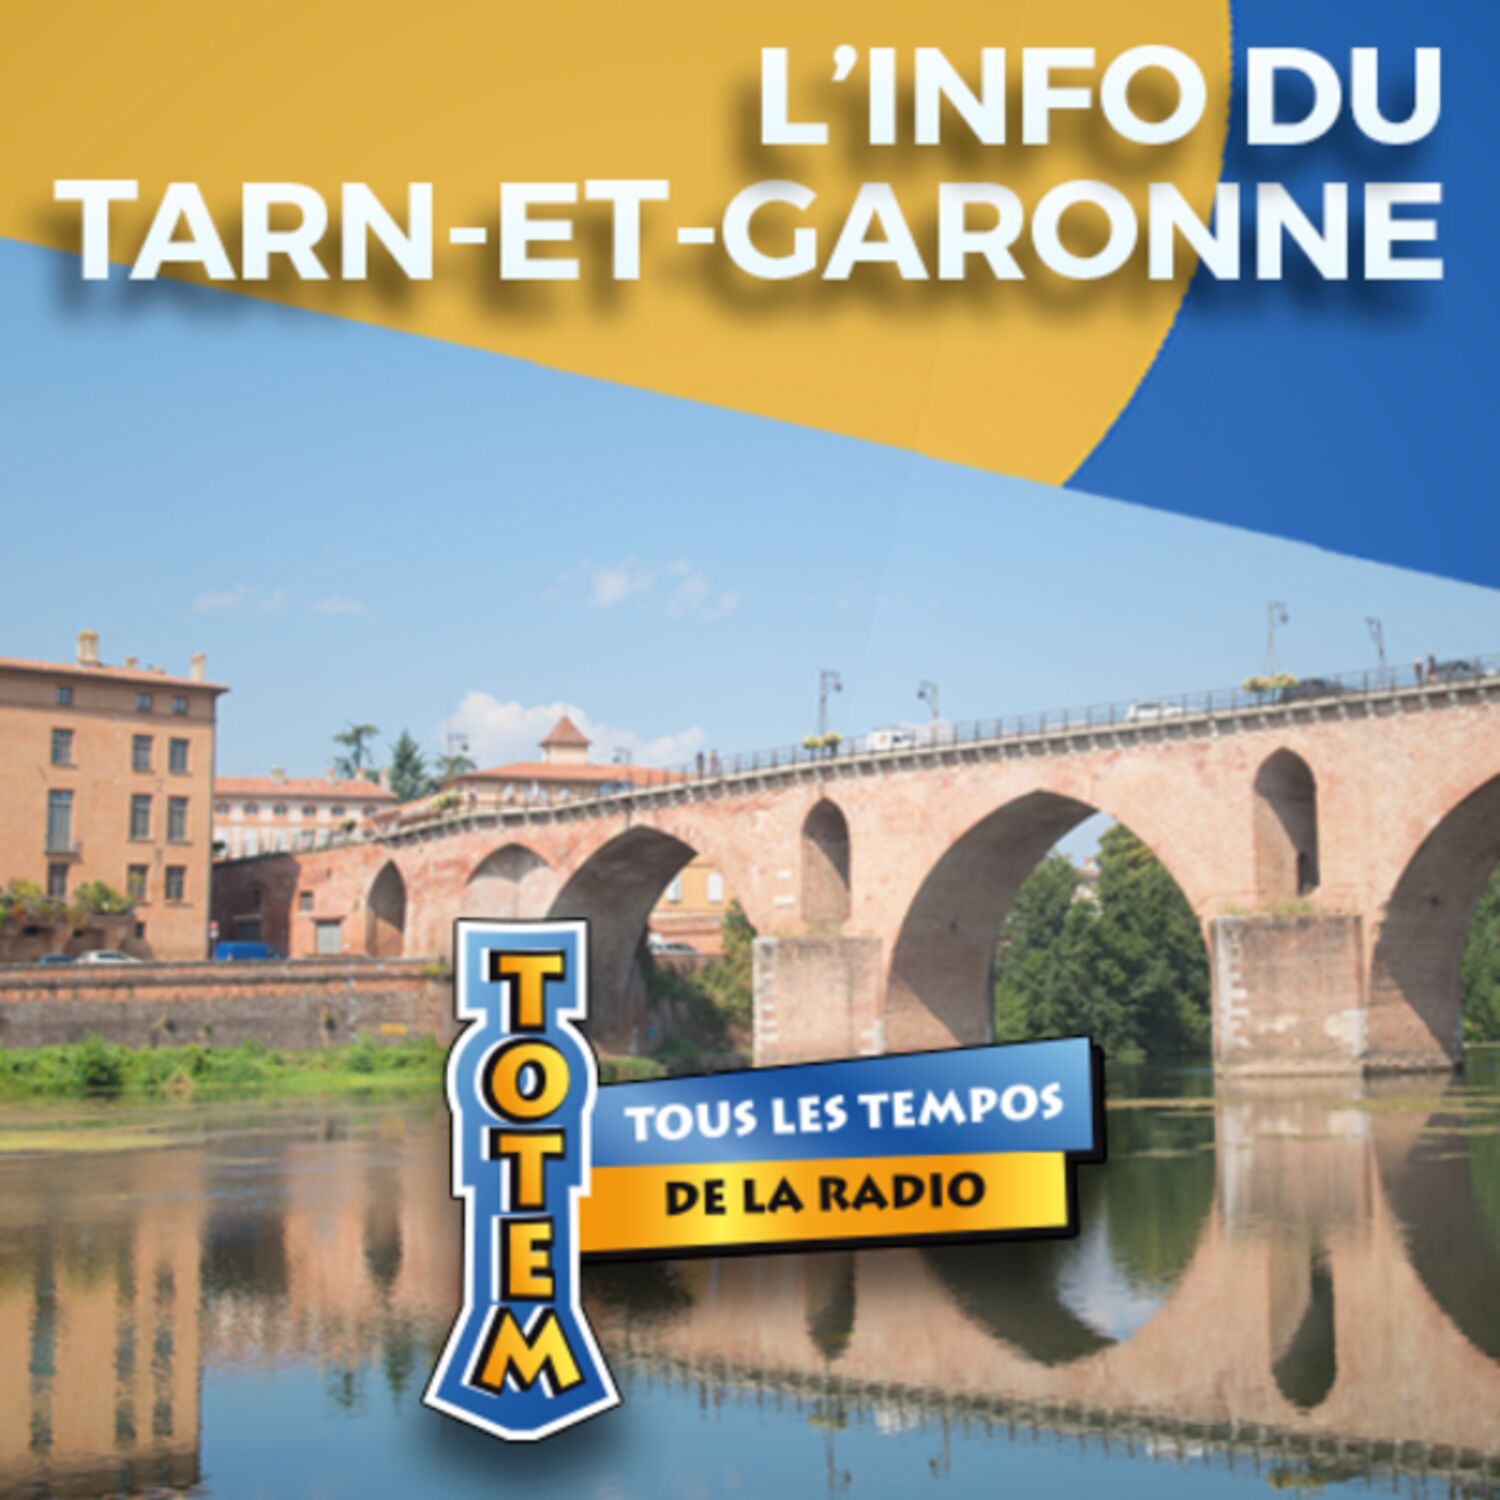 L'info du Tarn-et-Garonne du 04/04/23 à 06h29